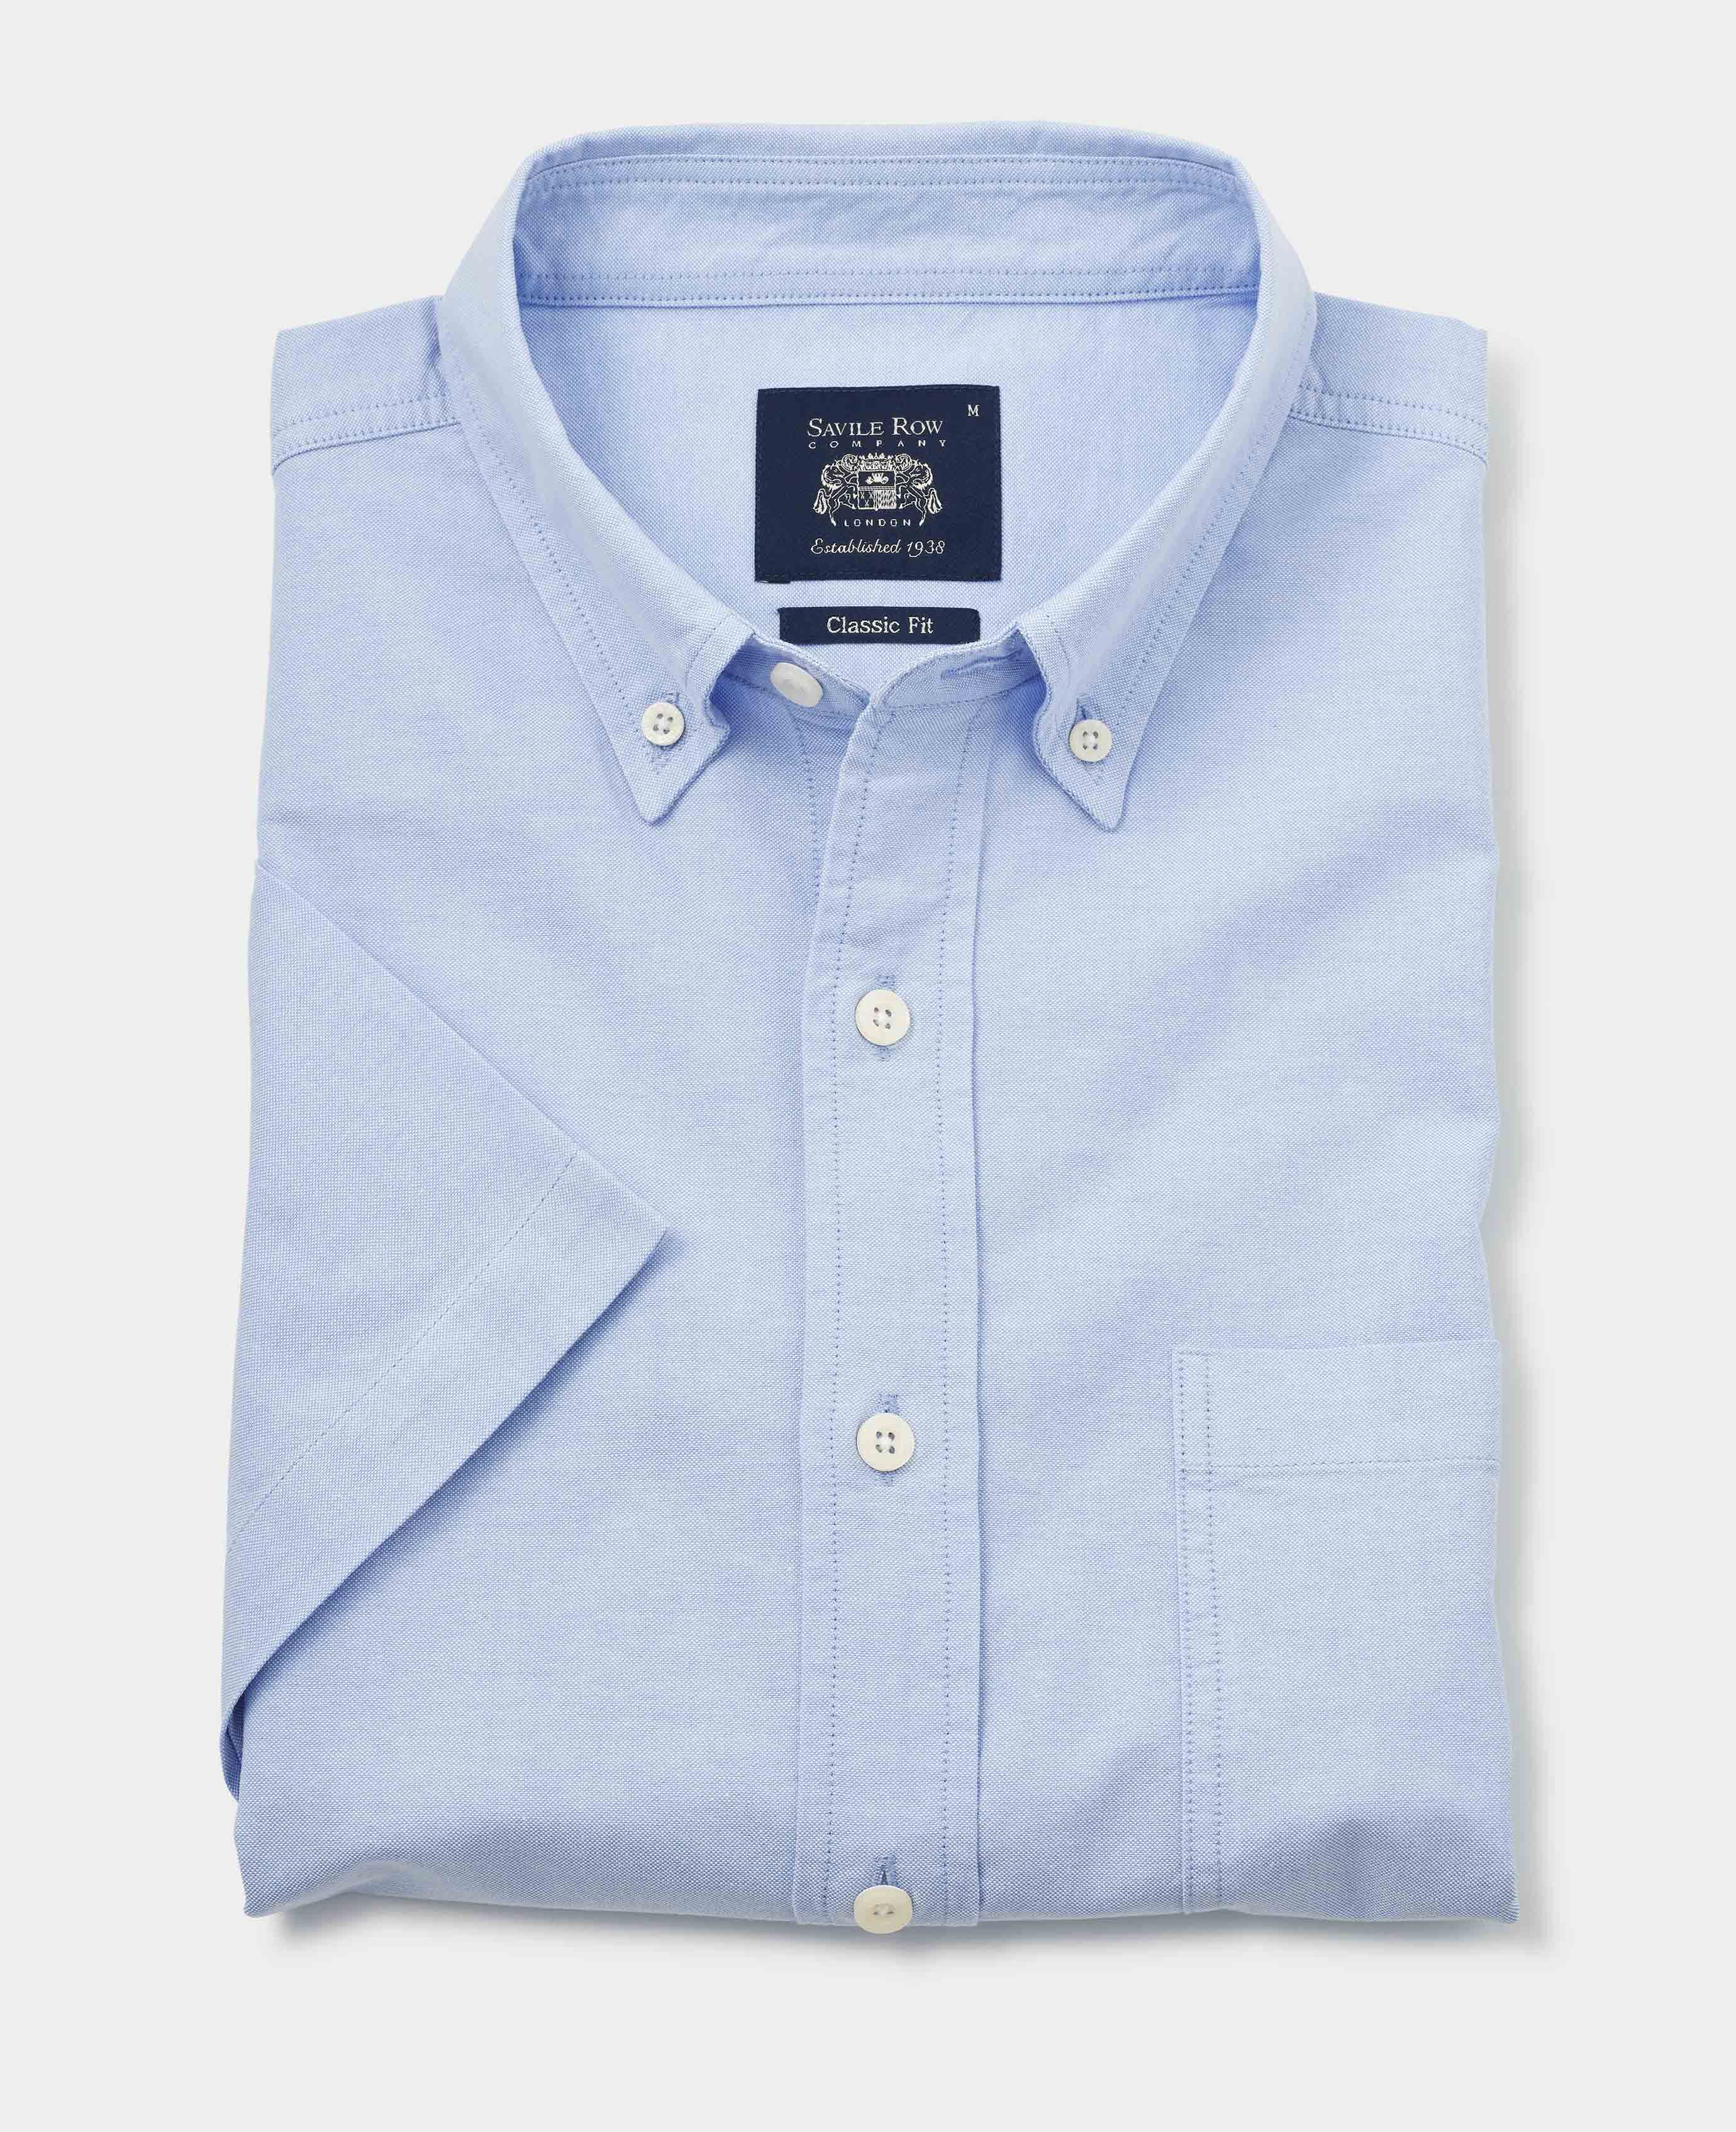 Men's Sky Blue Short Sleeve Oxford Casual Shirt | Savile Row Co